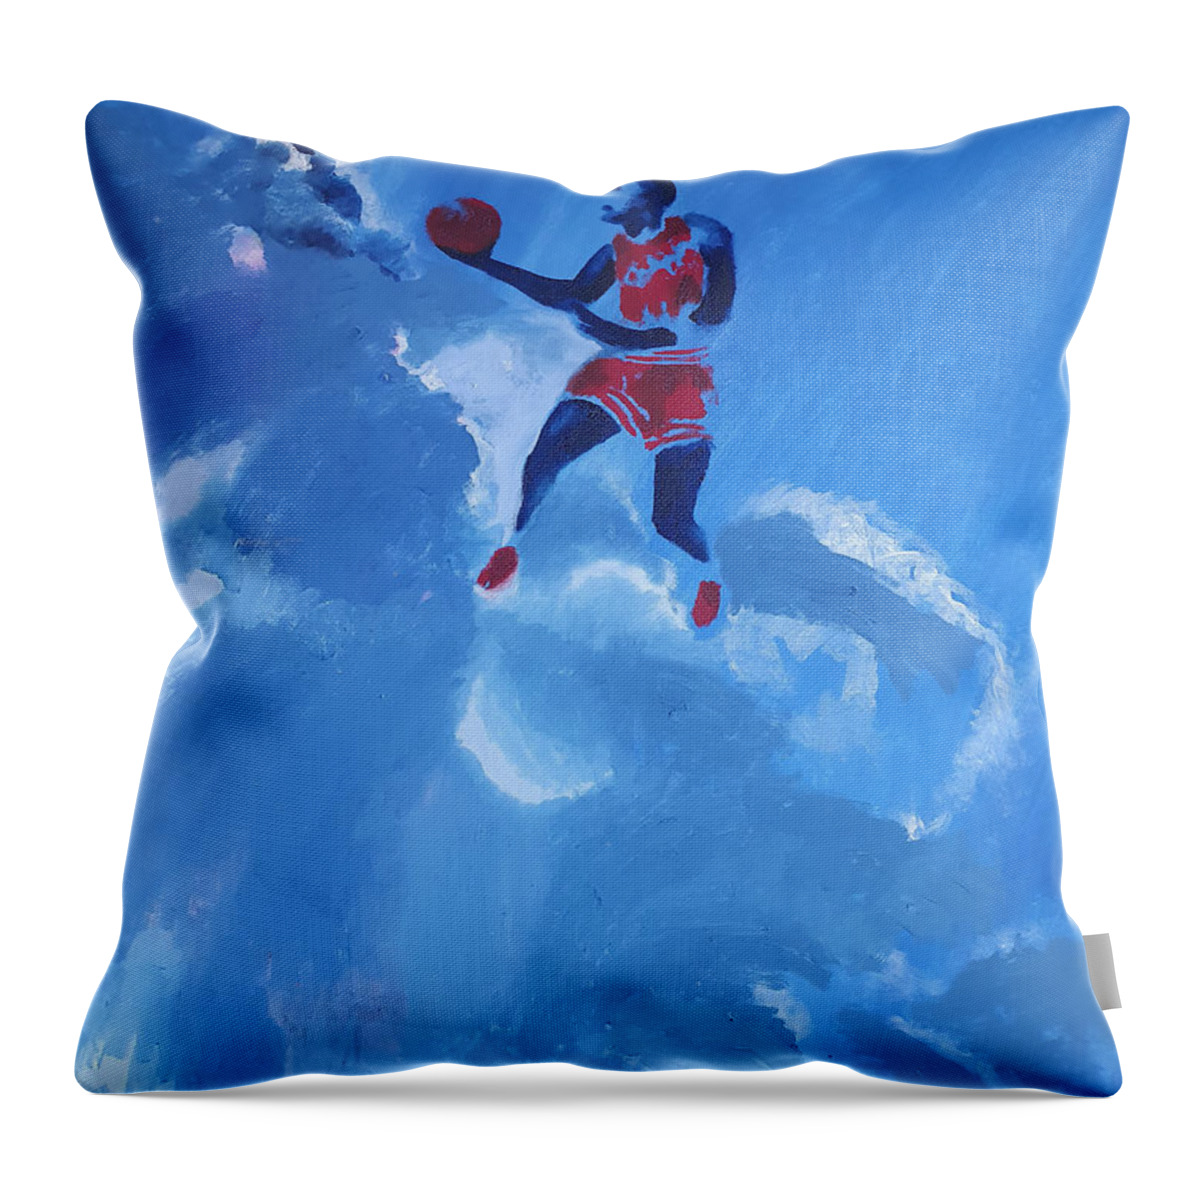 Michael Jordan Throw Pillow featuring the painting Omaggio a Michael Jordan by Enrico Garff